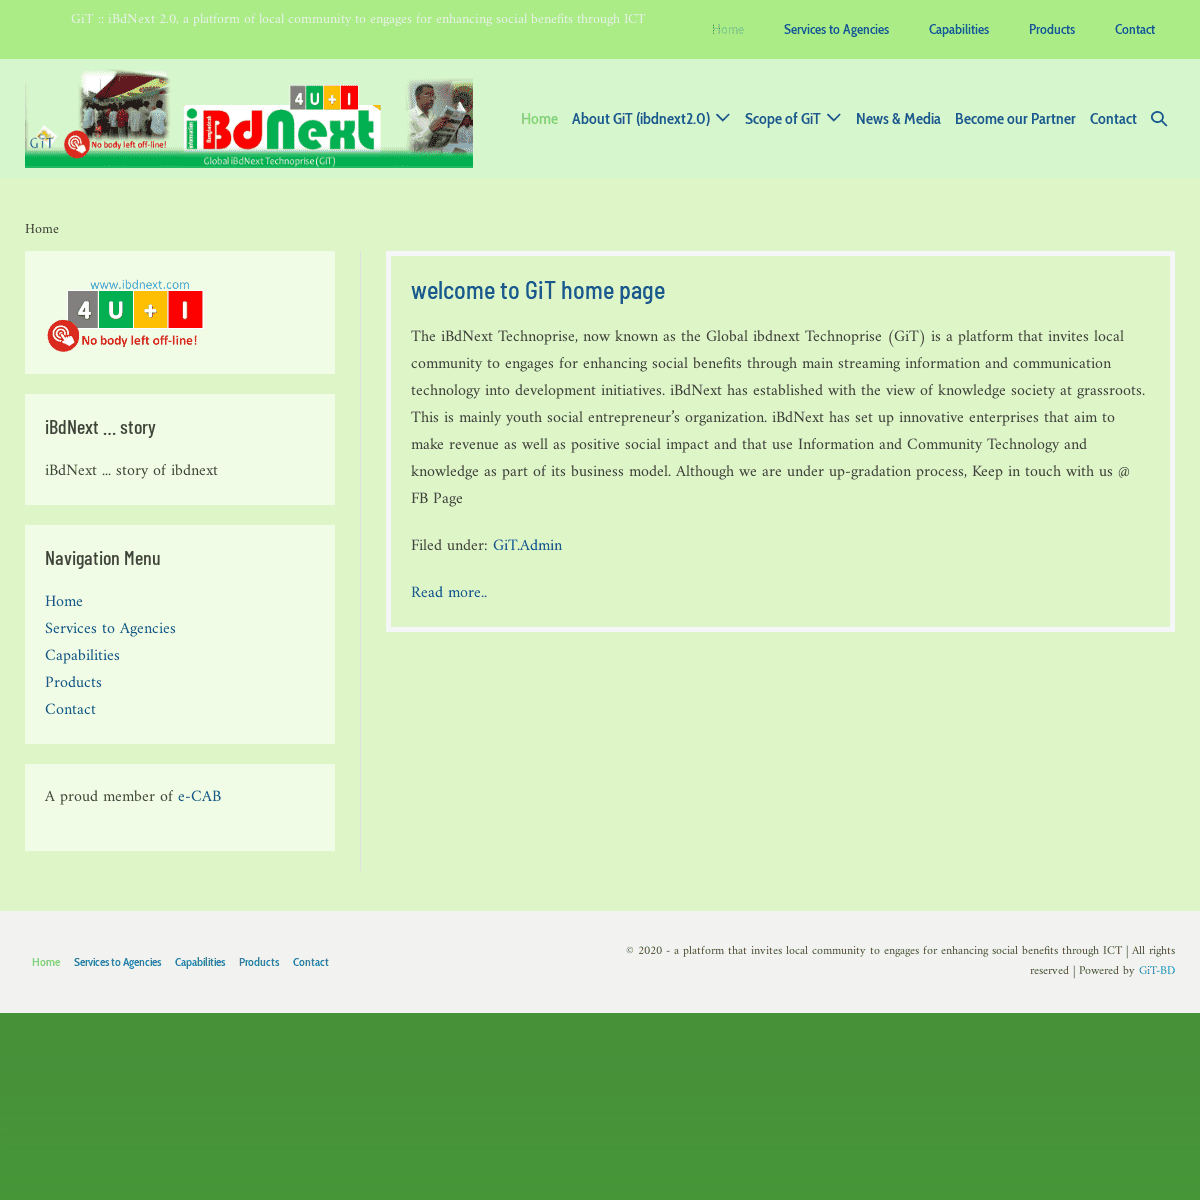 A complete backup of ibdnext.com